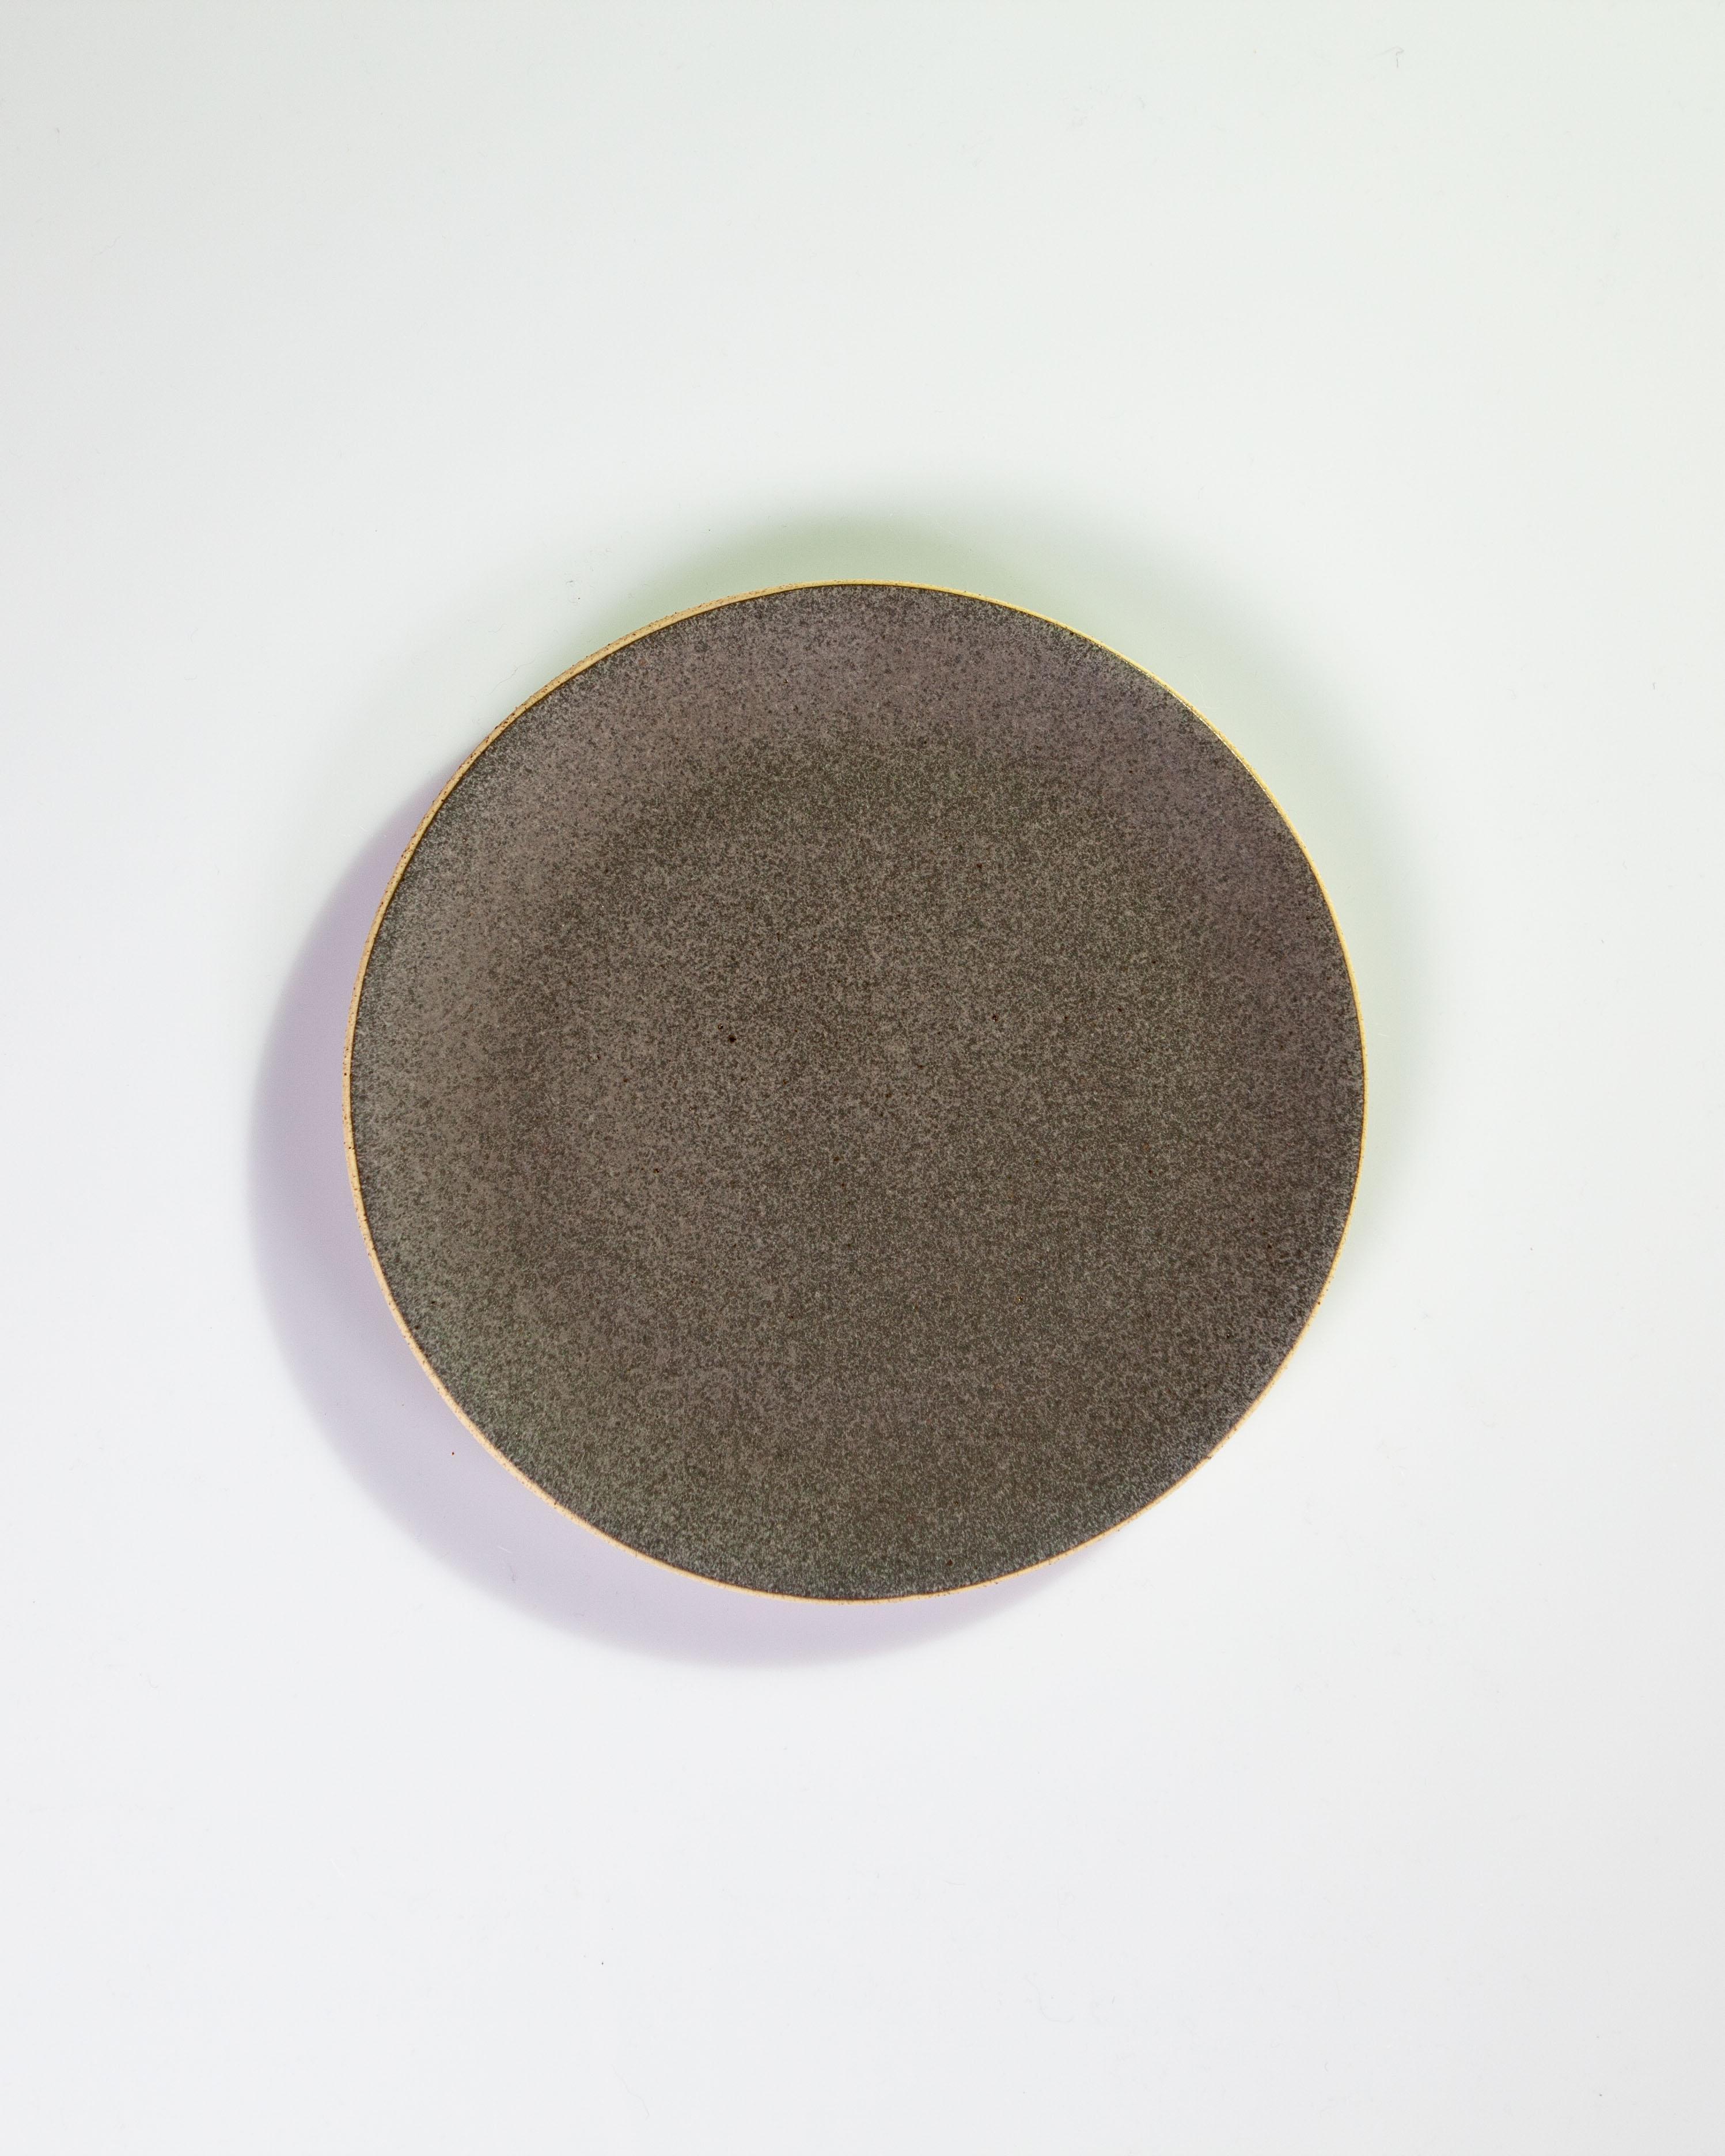 Organic Modern Handmade Ceramic Stoneware Four-Piece Place Setting in Grey, in Stock